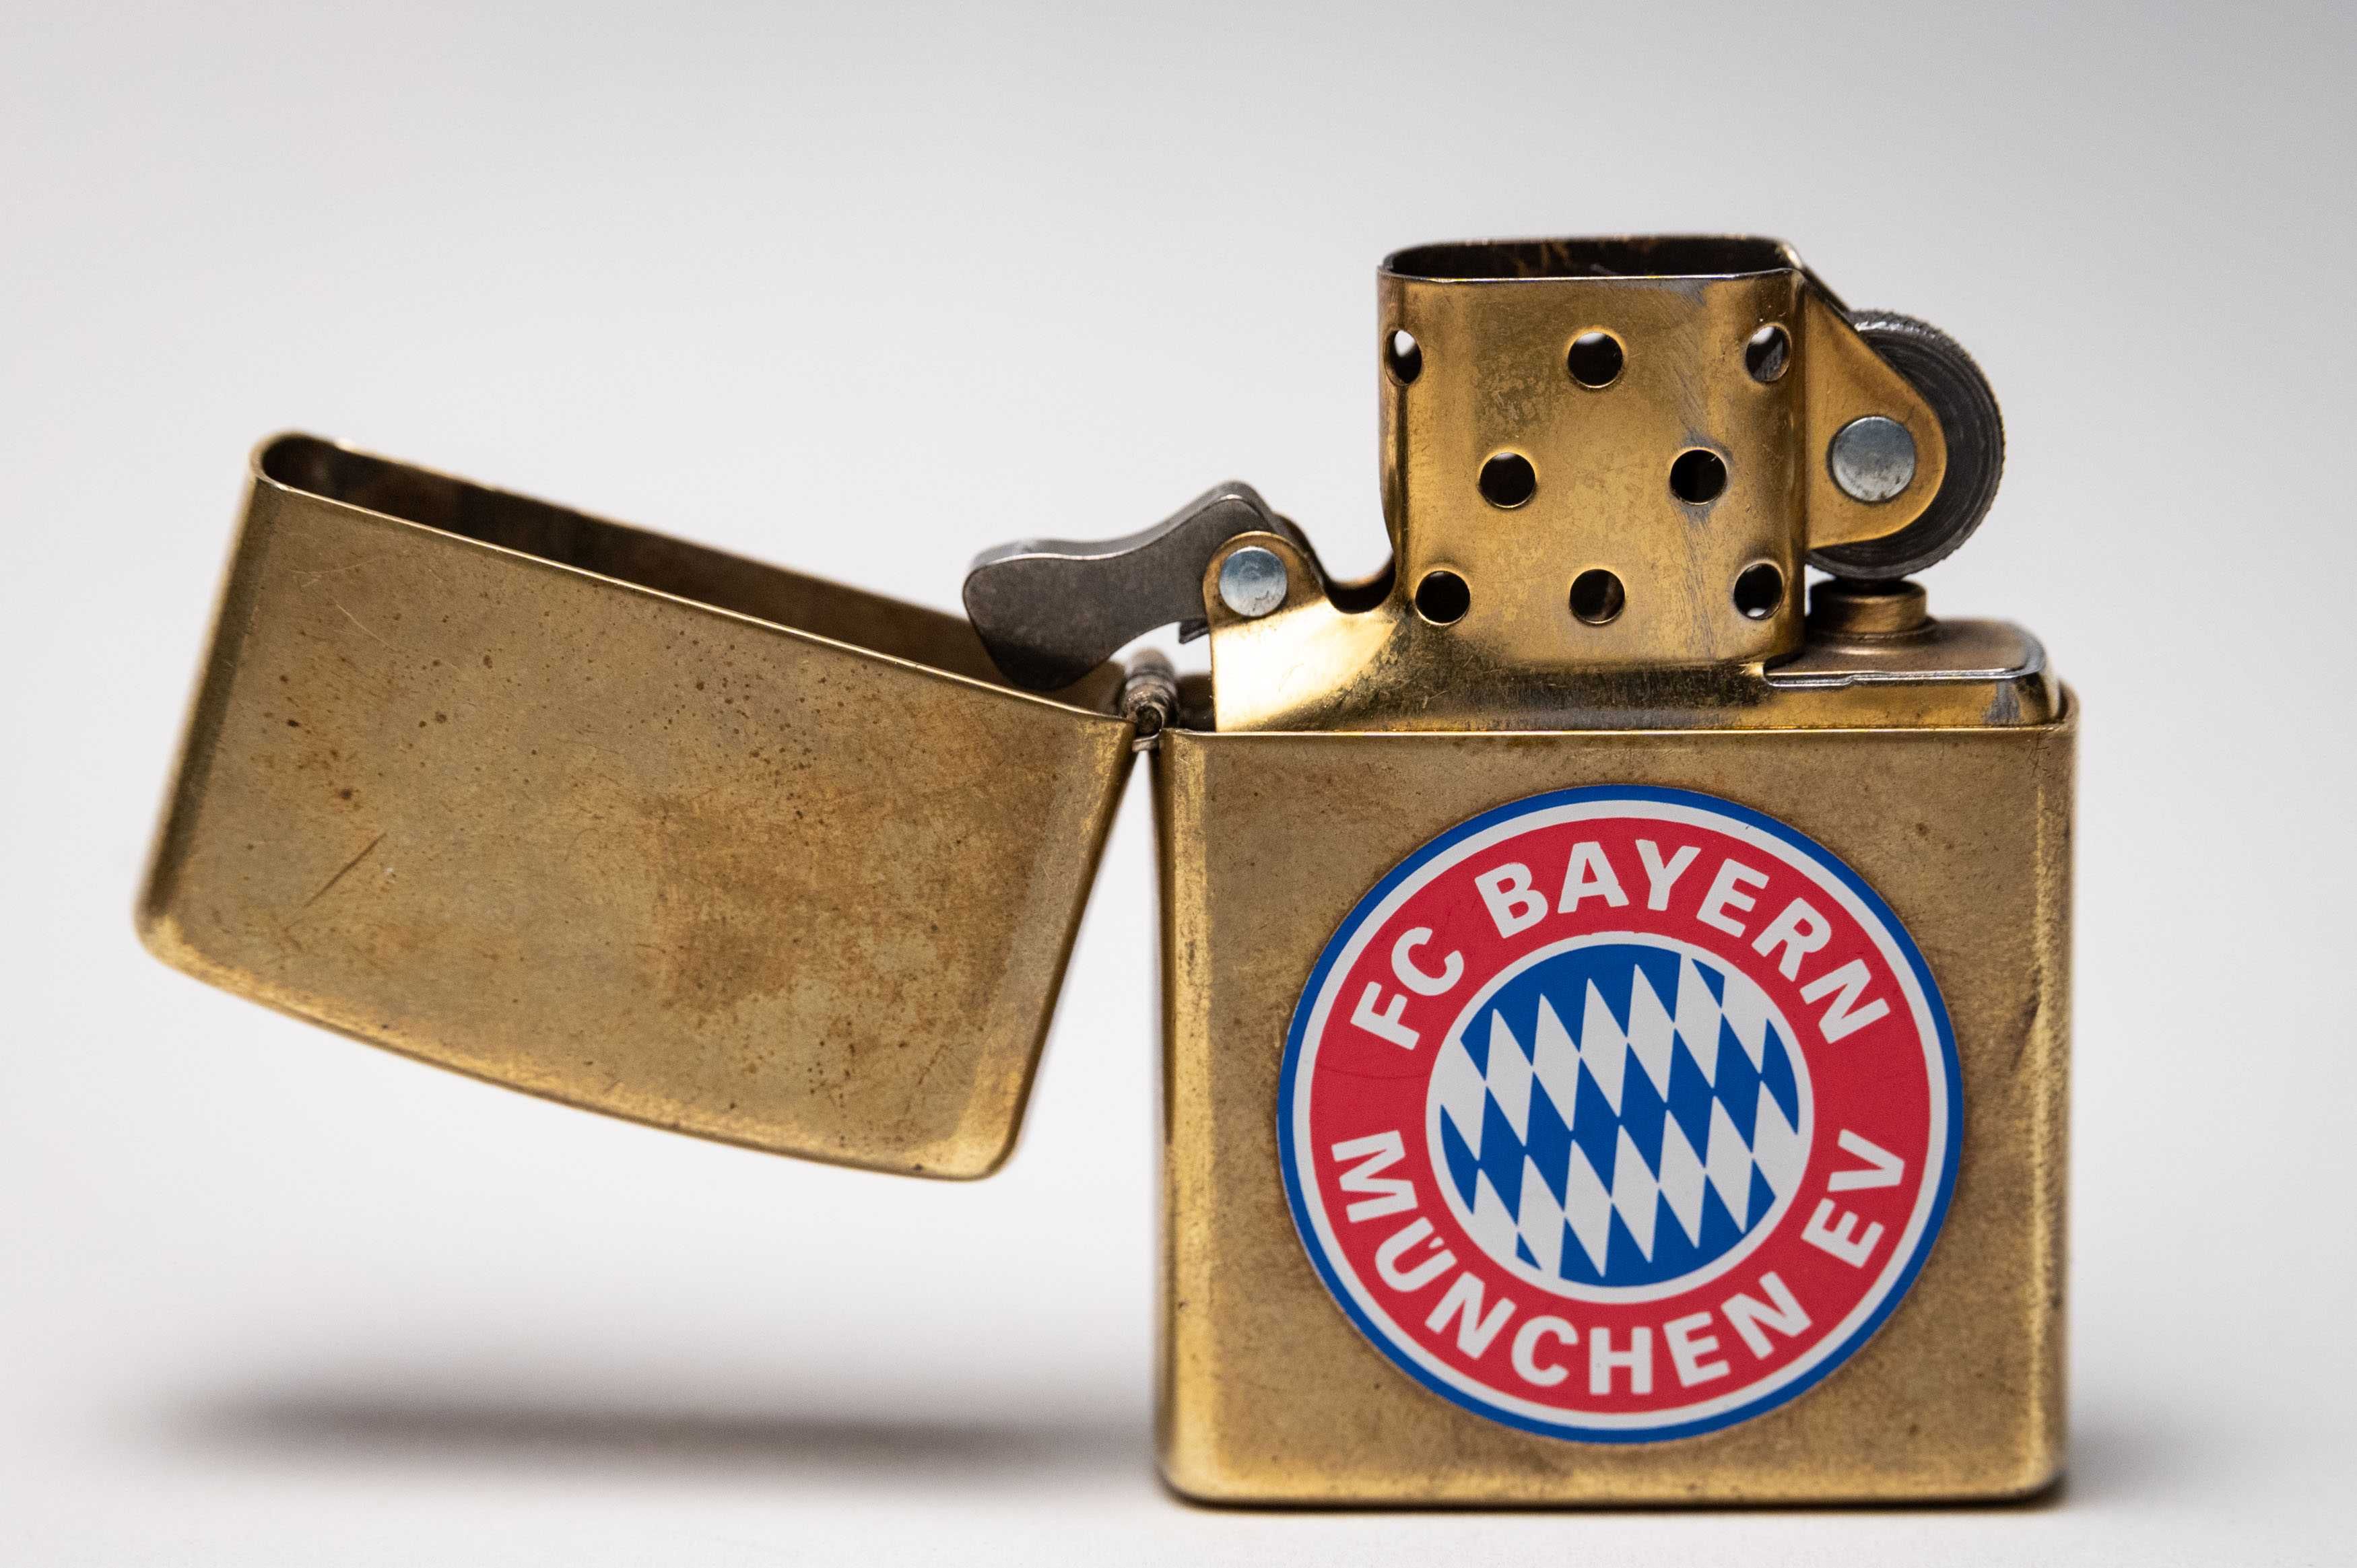 Bricheta zippo de colectie, 1997, FC Bayern München